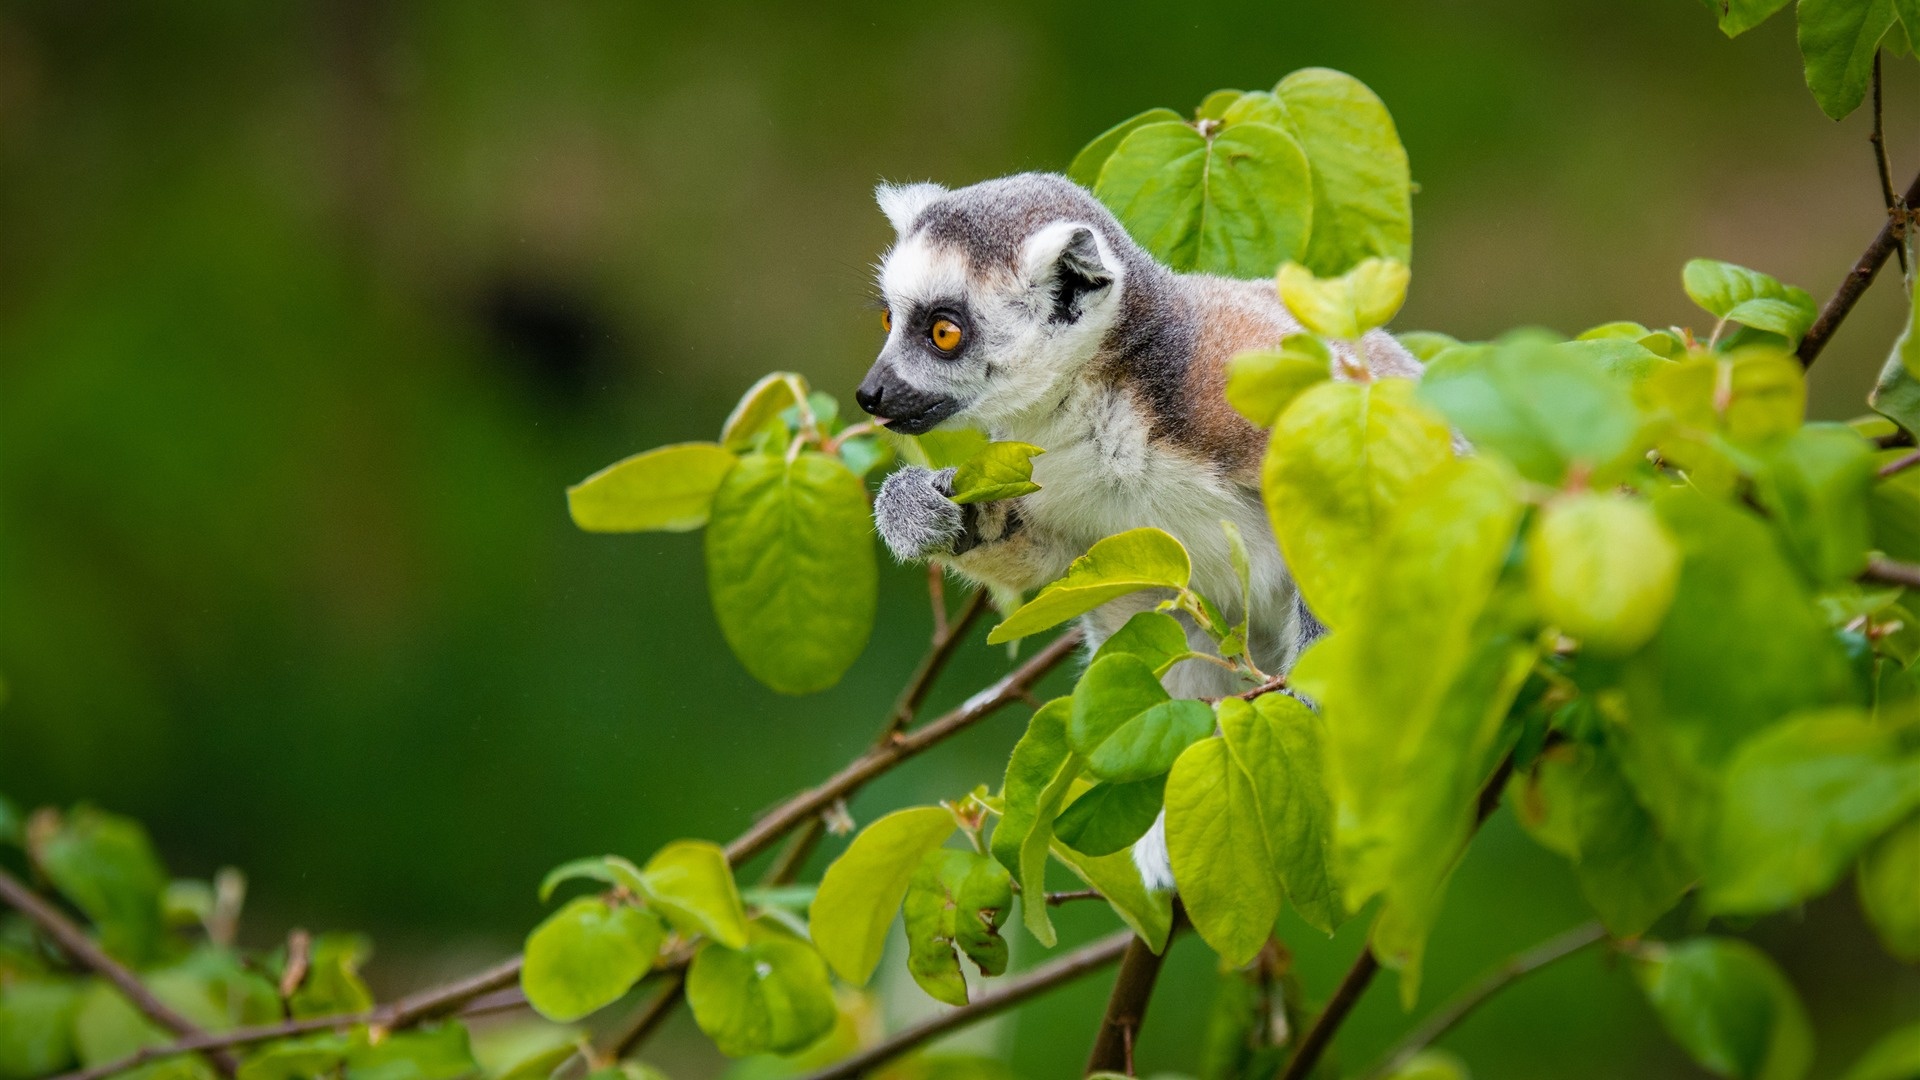 Cute lemur, Playful antics, Adorable expression, Lively background, 1920x1080 Full HD Desktop